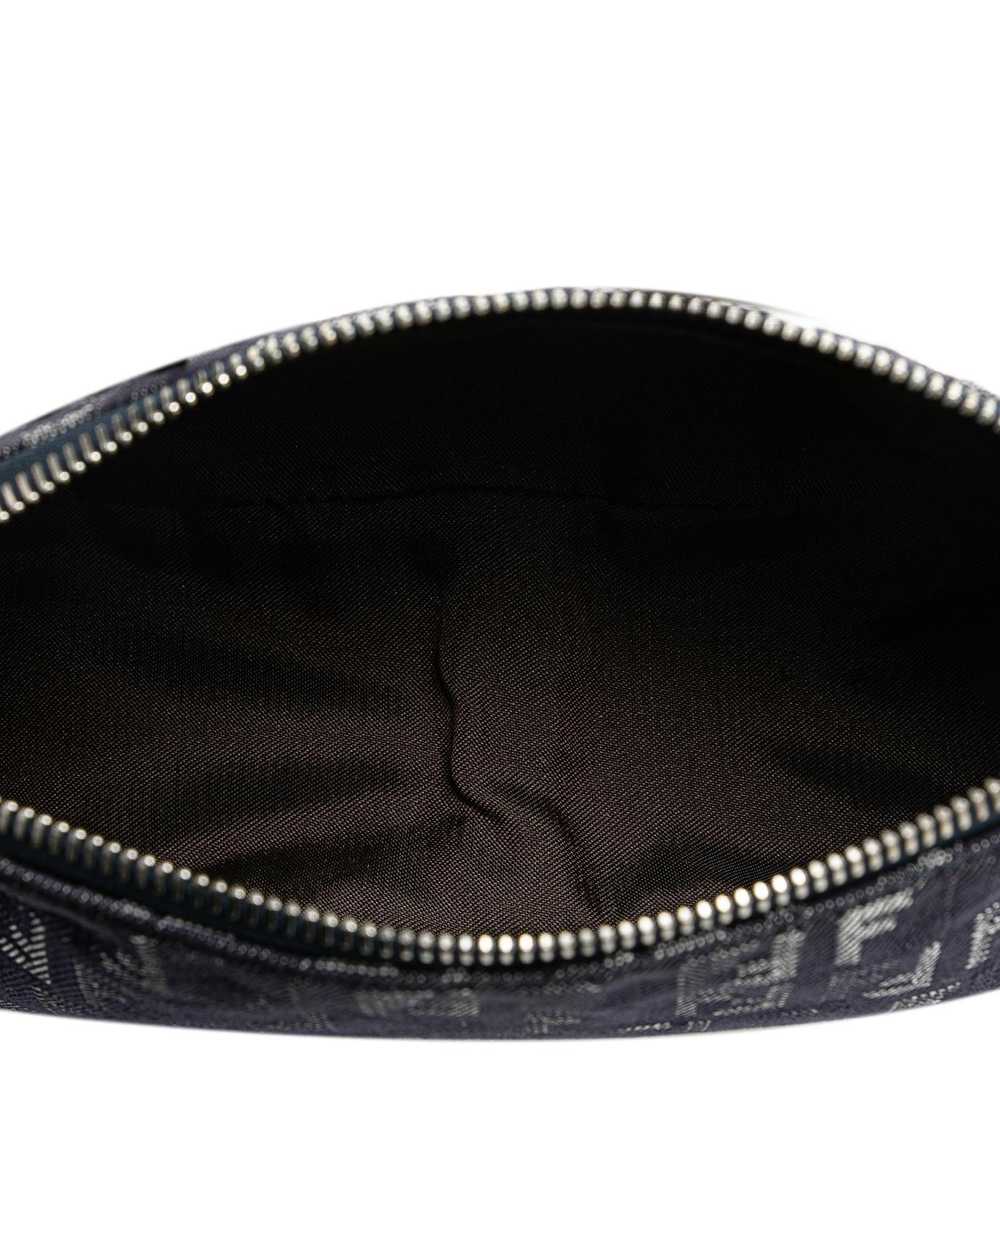 Fendi Denim Shoulder Bag with Top Zip Closure - image 5